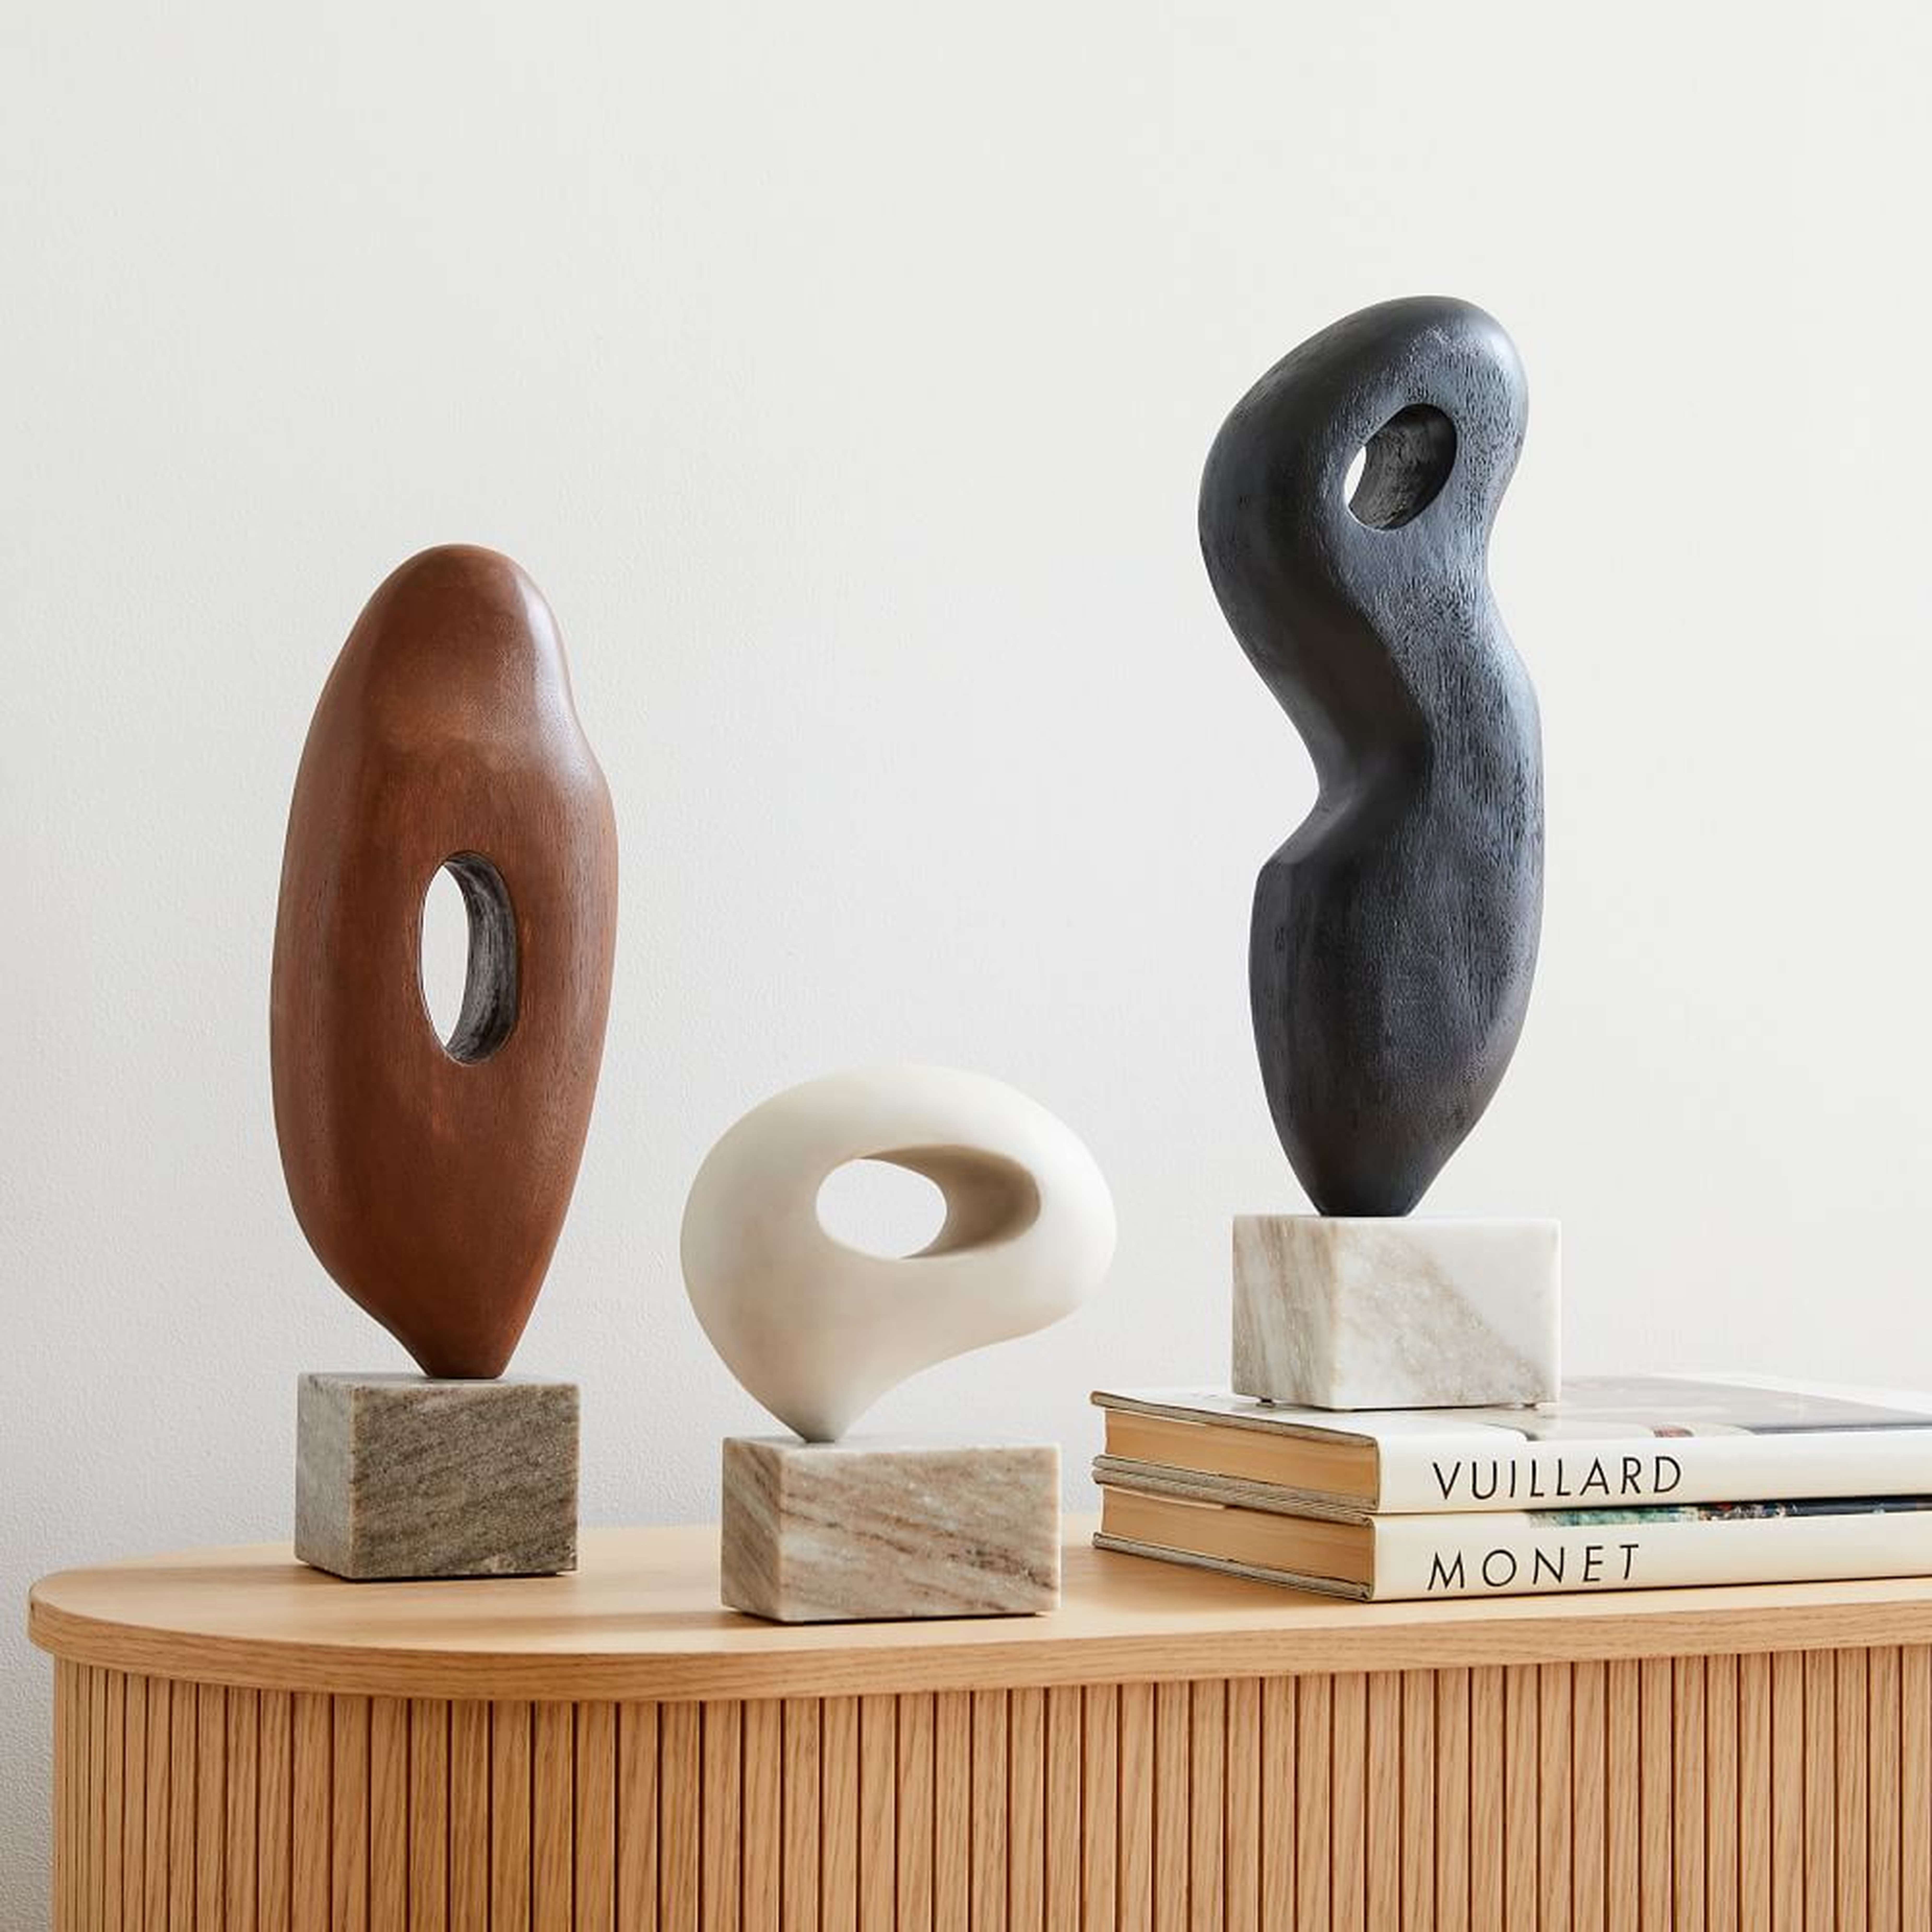 Alba Wood Sculptural Objects, Set of 3 - West Elm